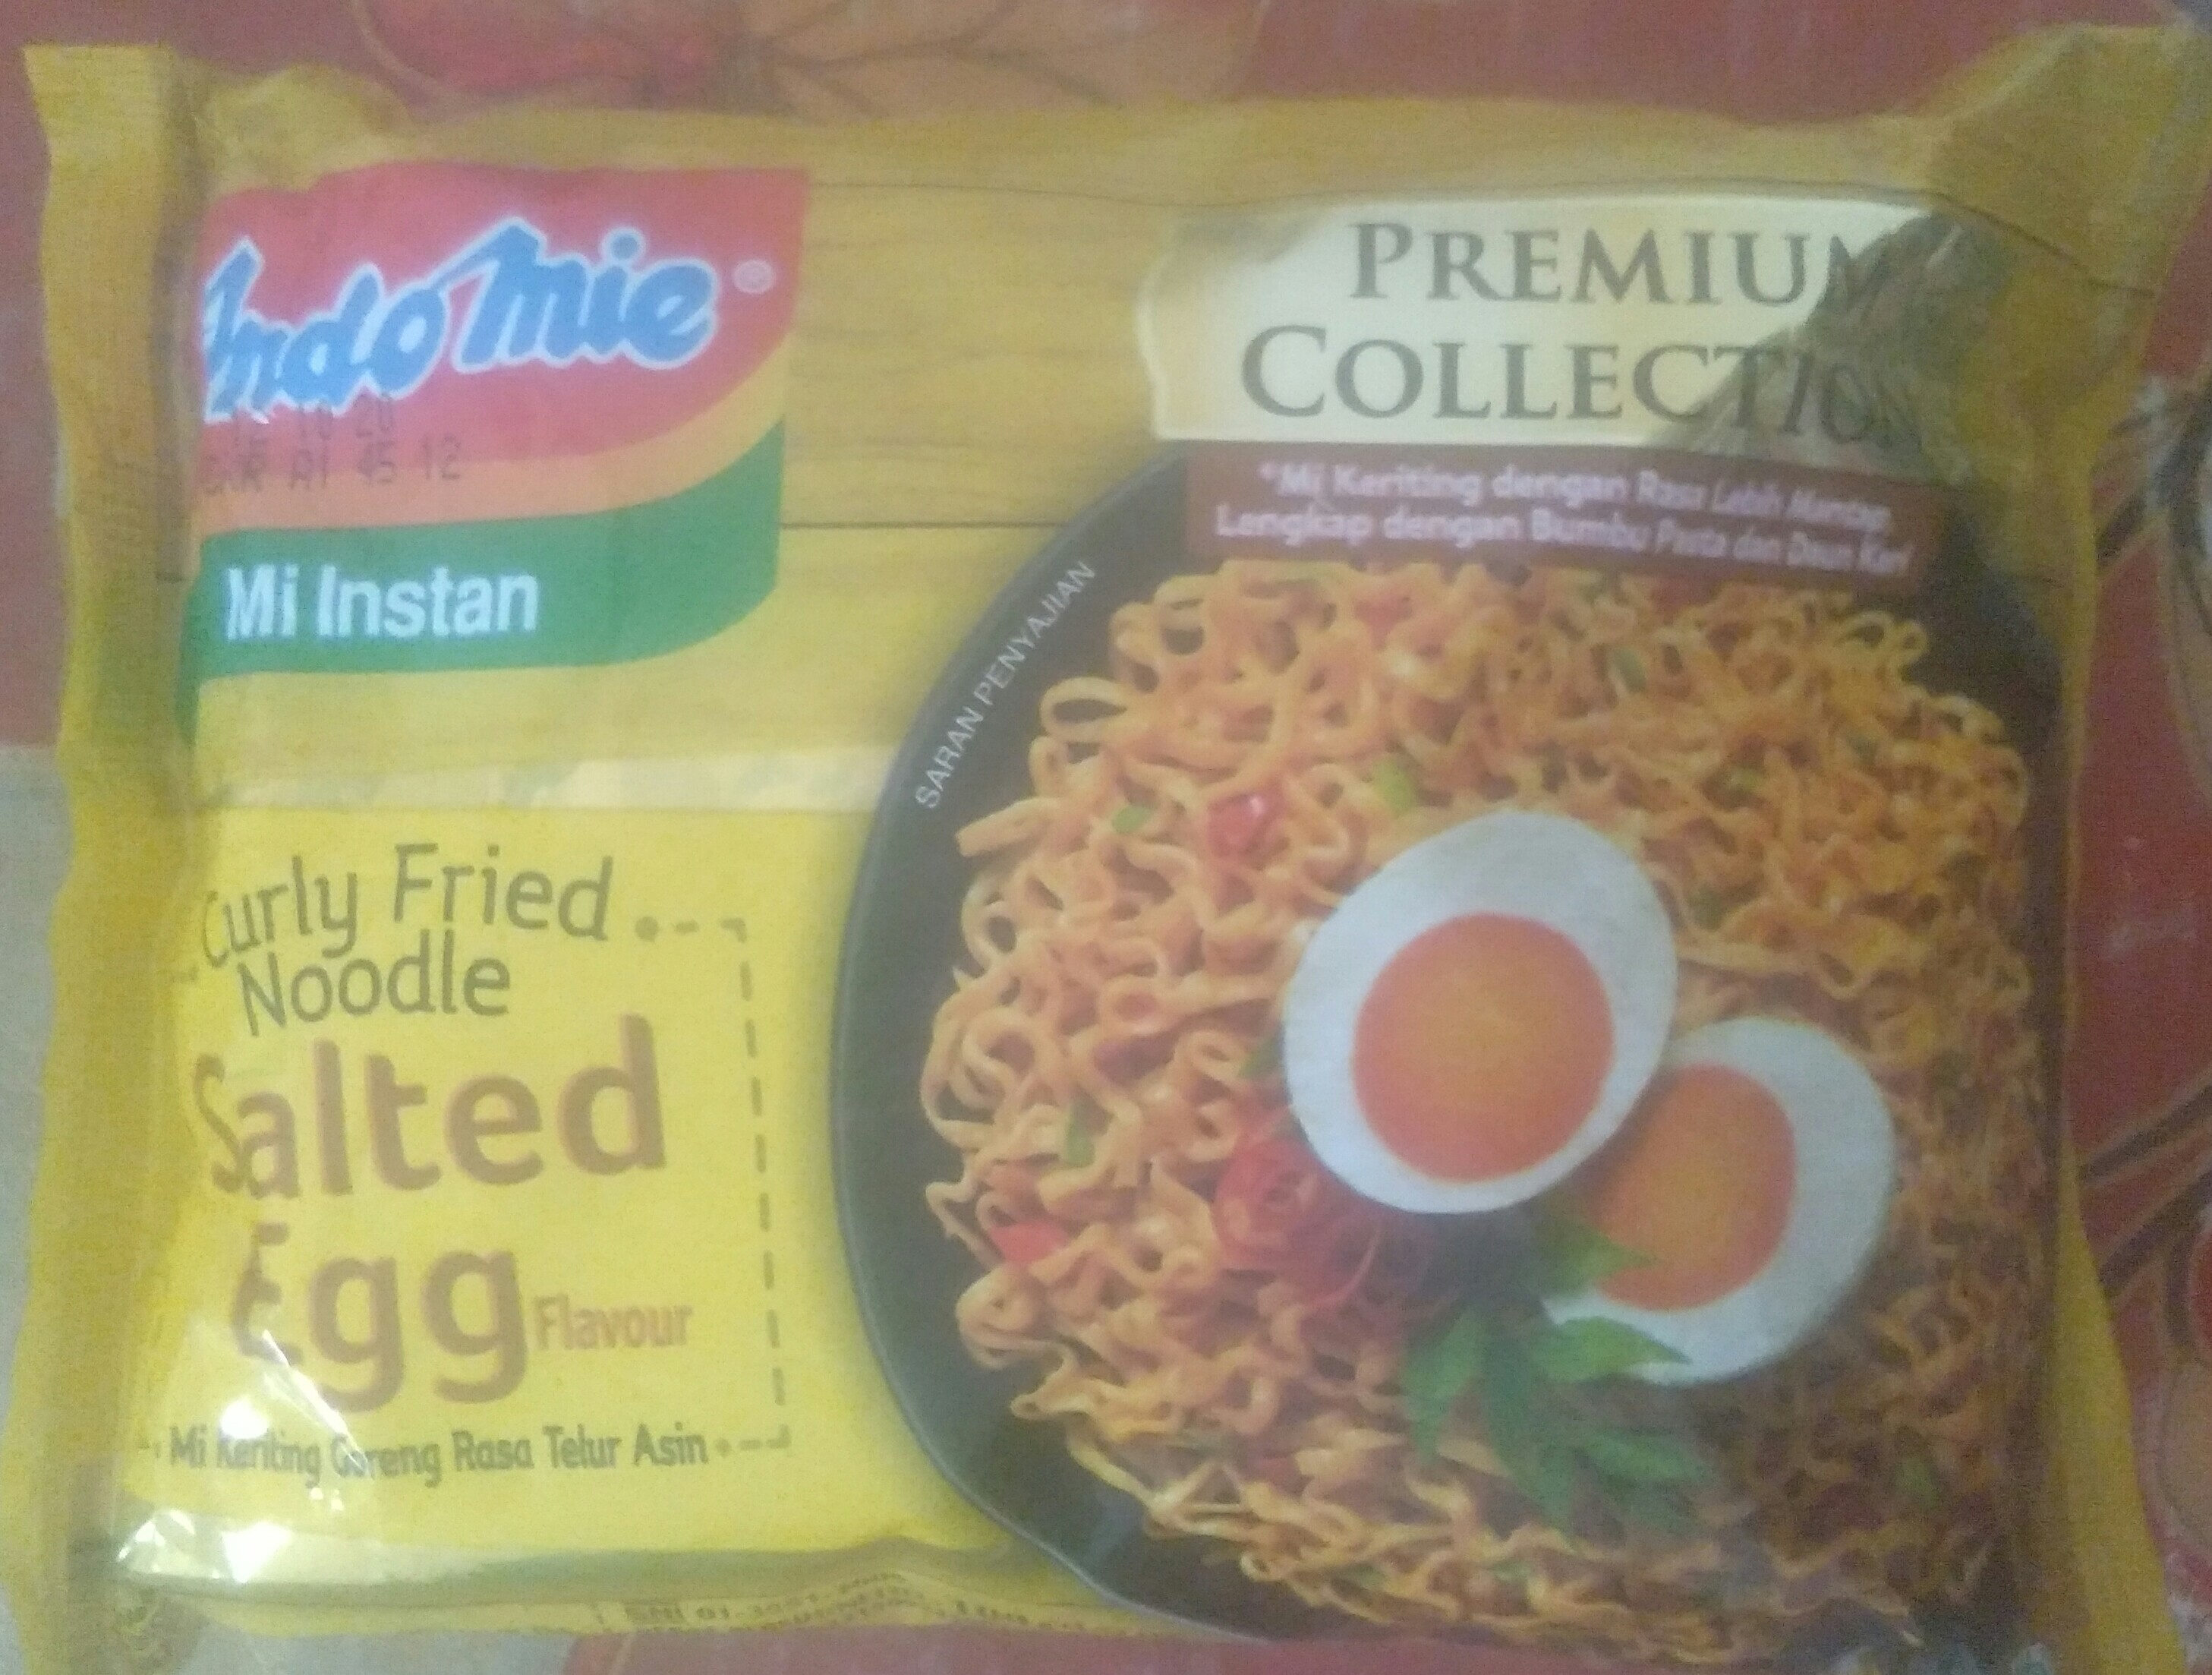 Indomie Mi instant curly fried noodle salted egg flavour - Product - en